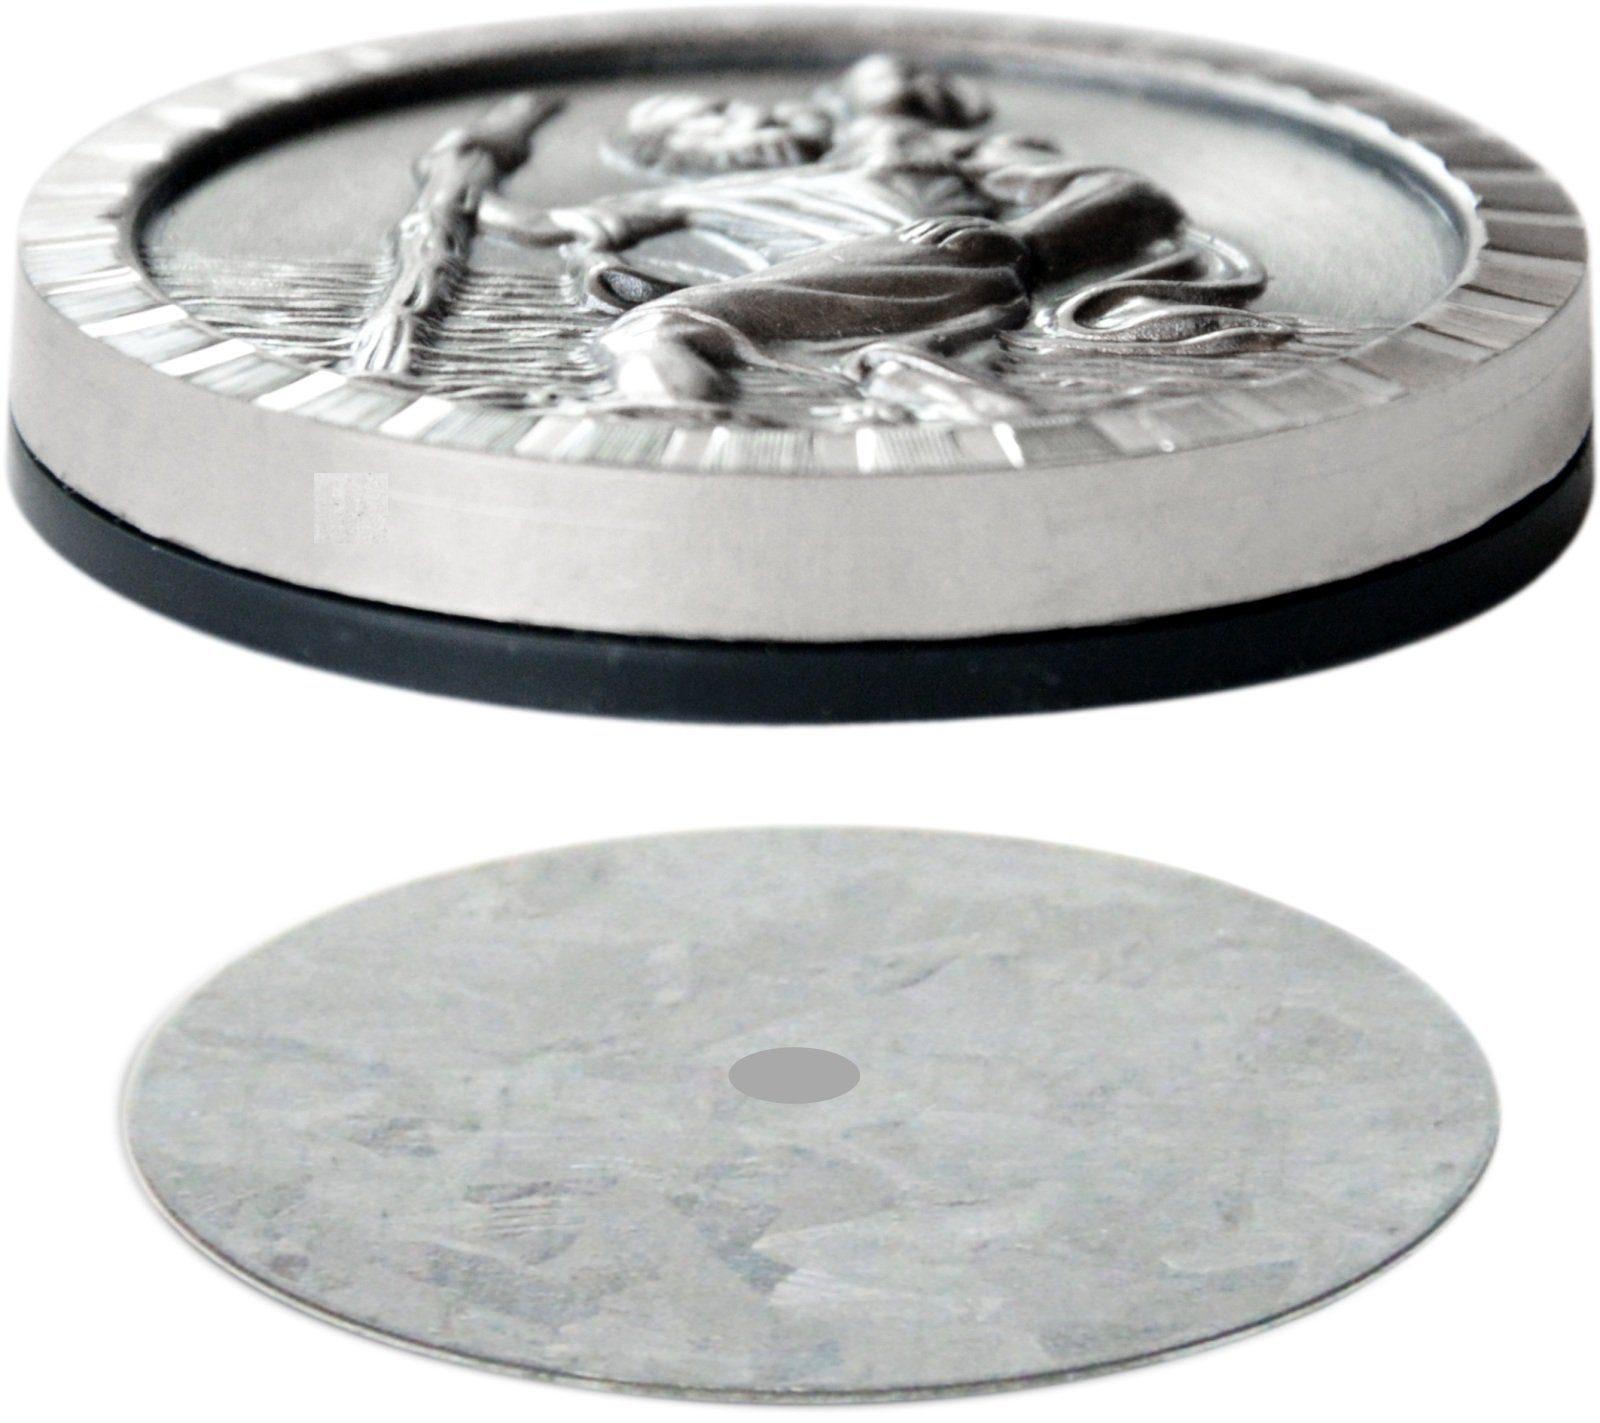 Christopherus PistolaPeppers Relief Sankt cm Magnethalter Amulett mit Metall Plakette 4,5 Heiliger Christophorus